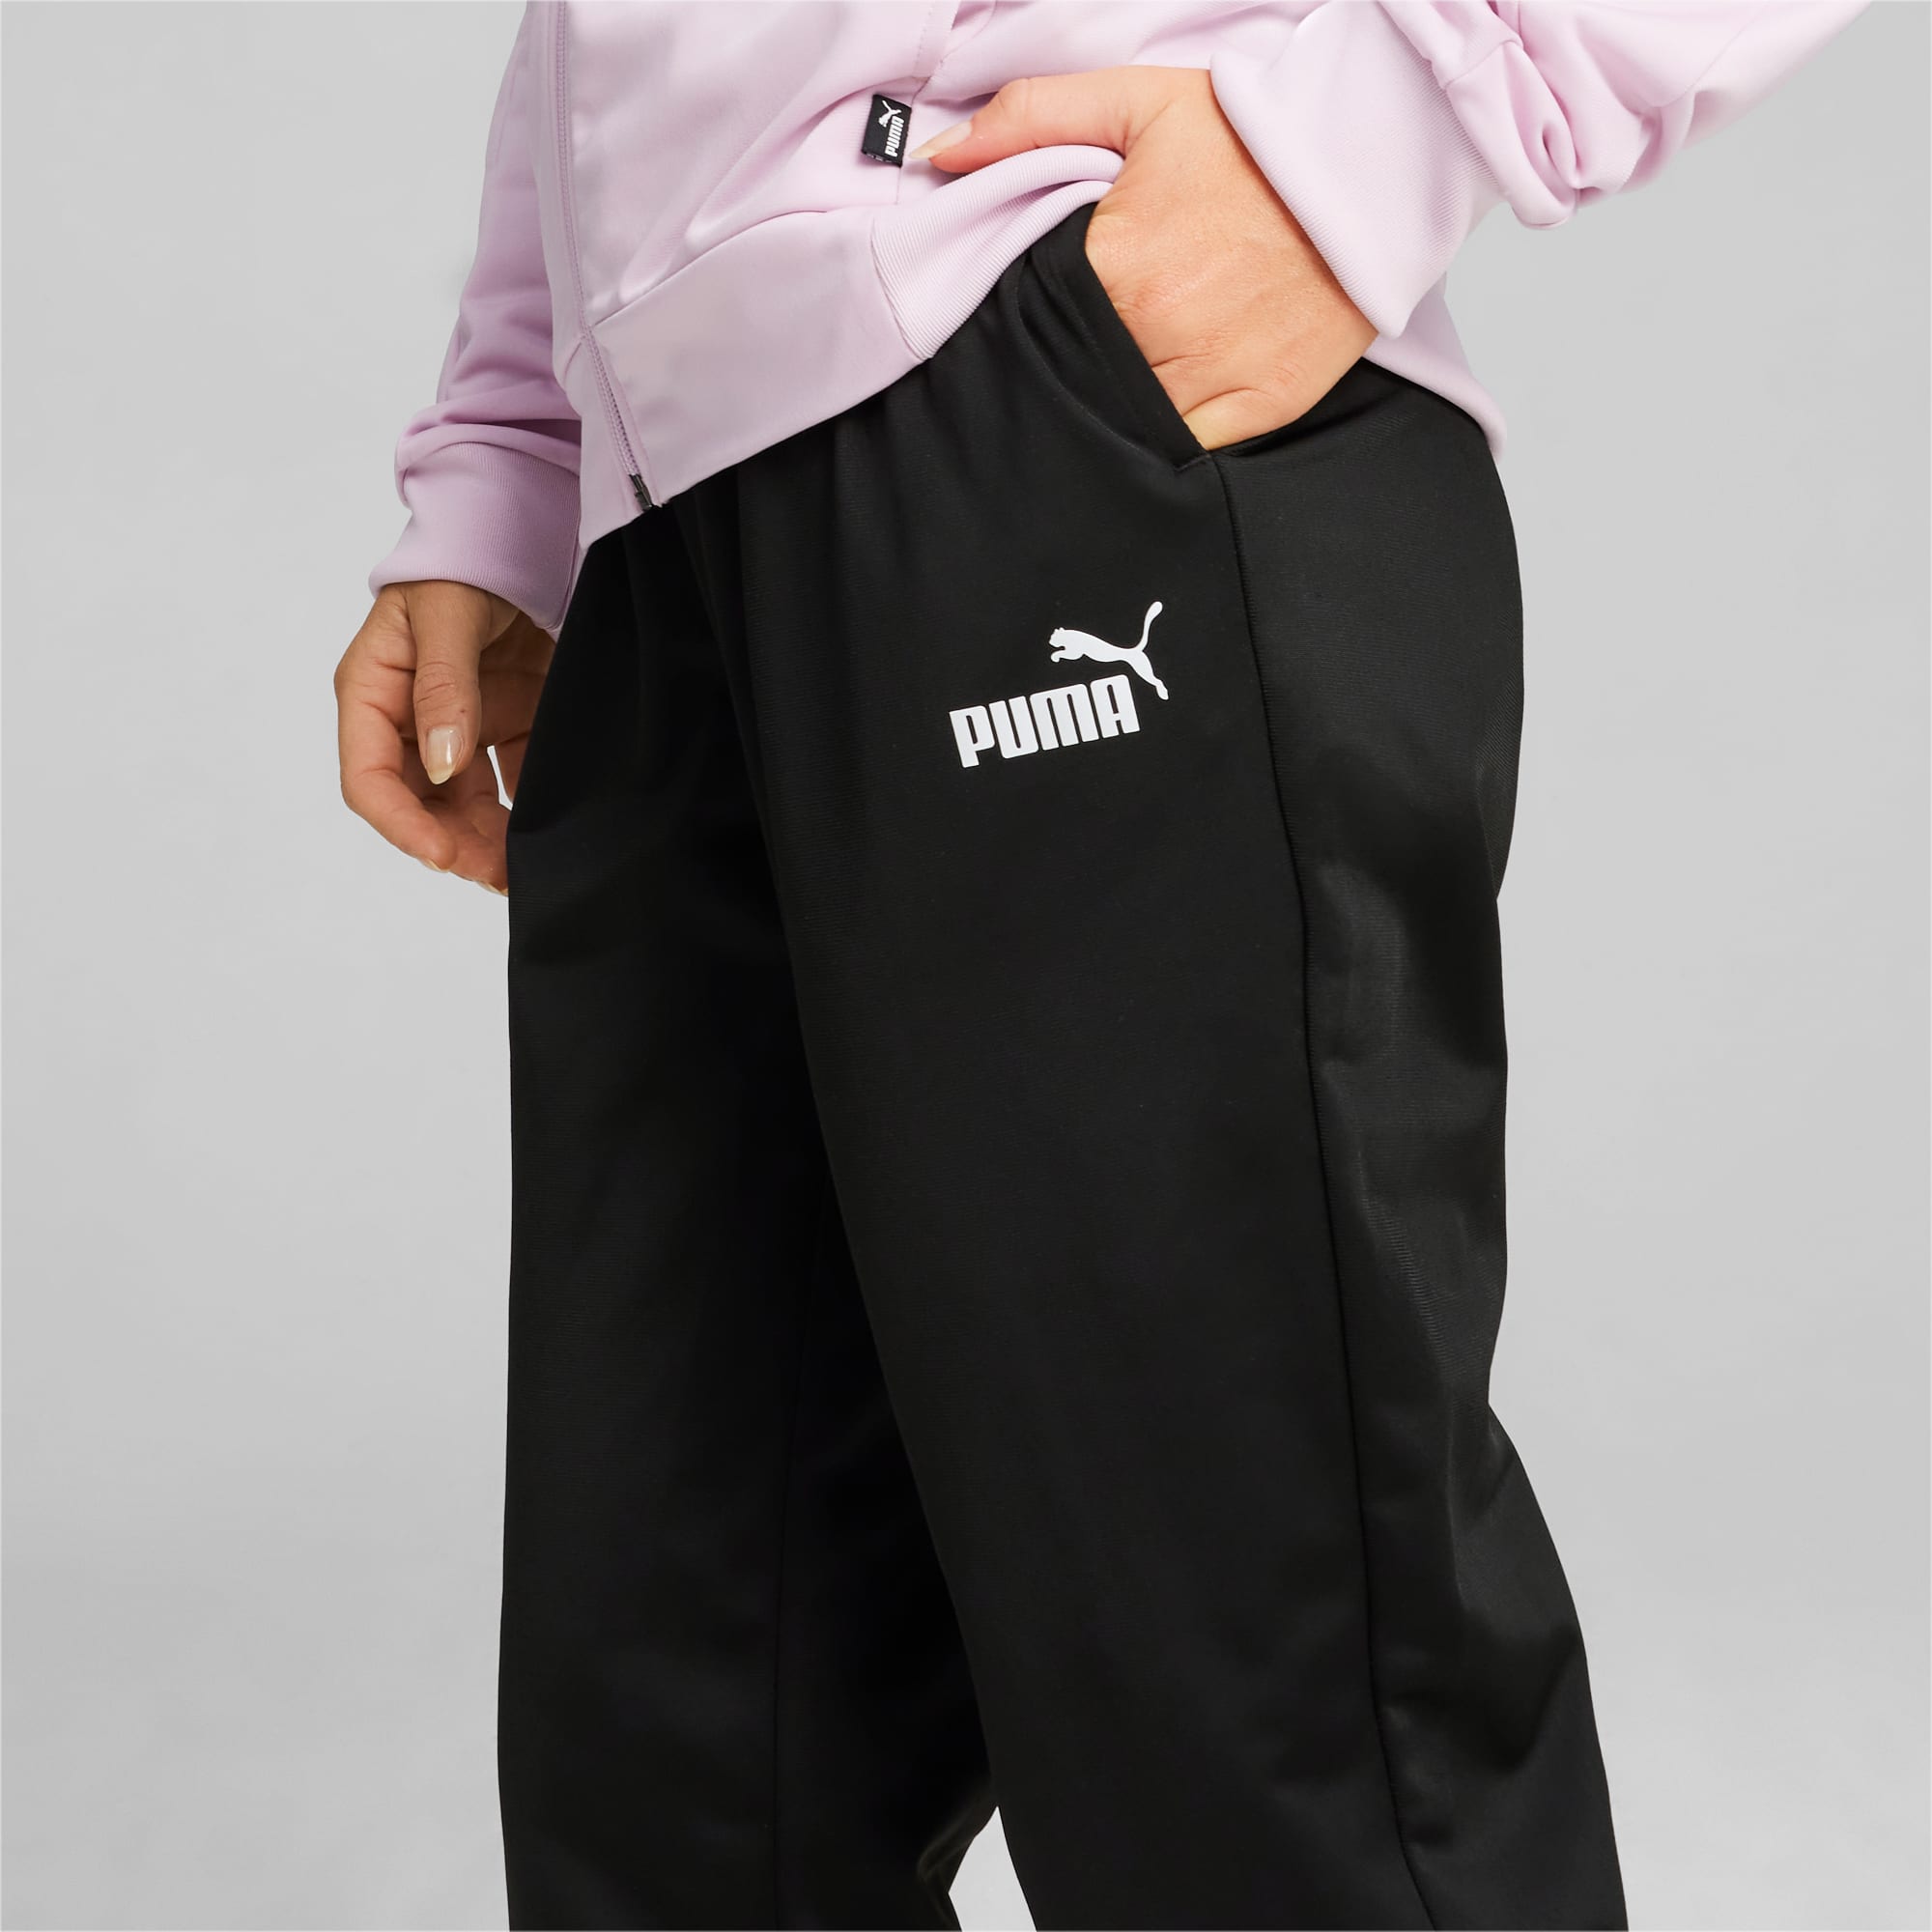 PUMA Women's Baseball Tricot Suit, Grape Mist, Size XS